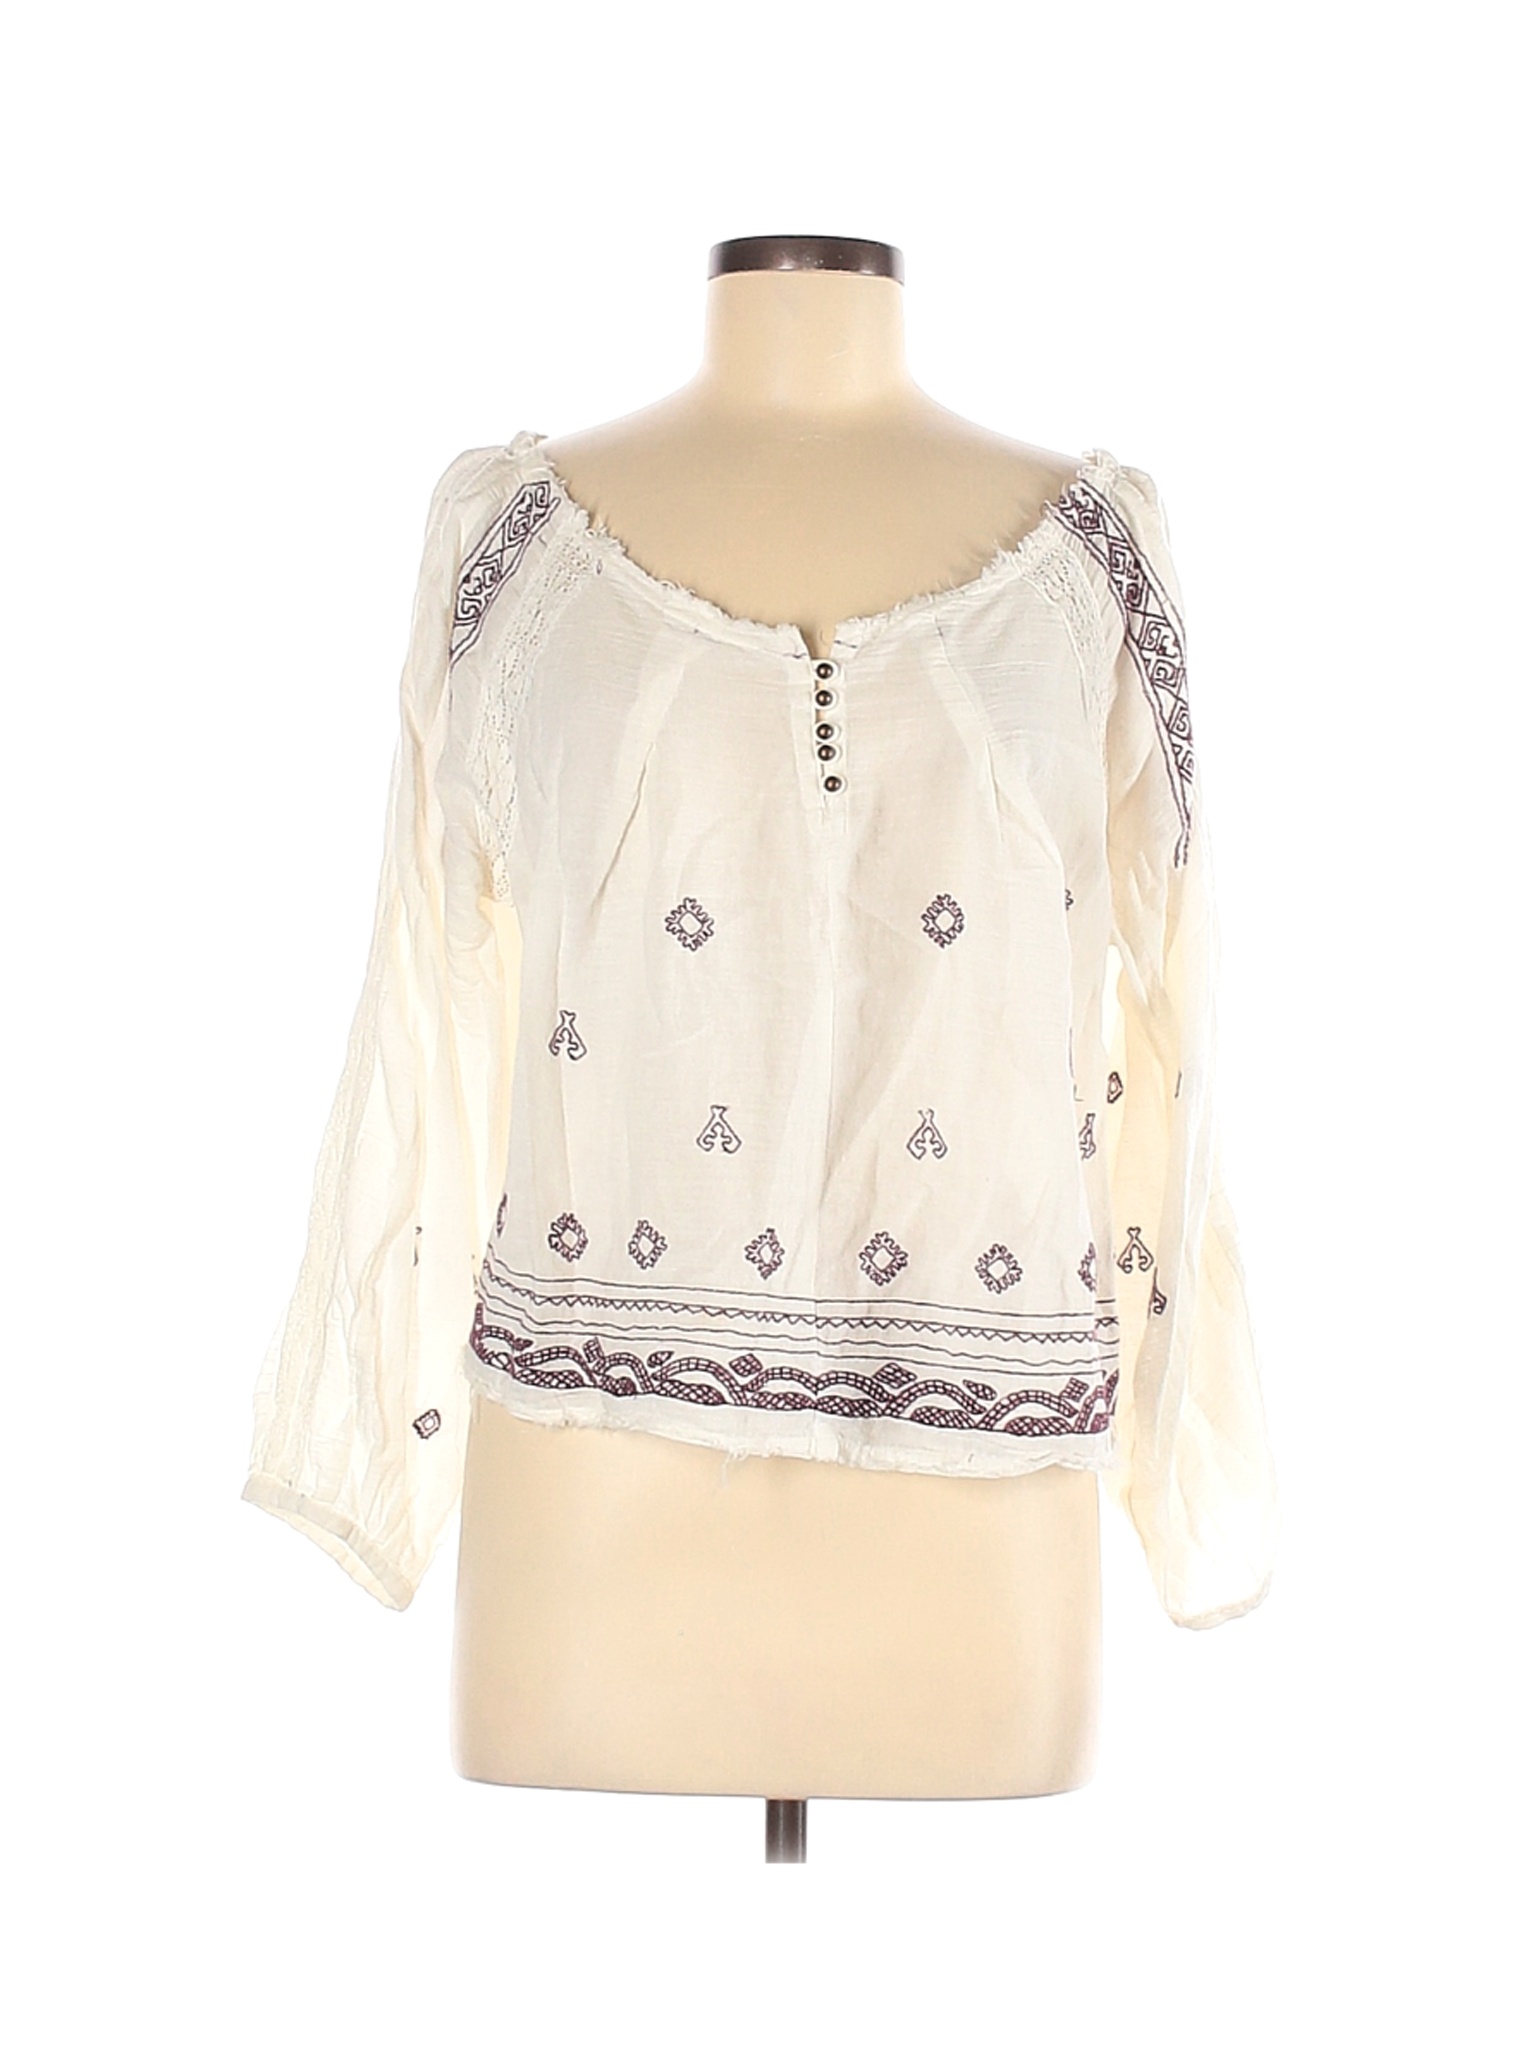 Trafaluc by Zara Women Ivory Long Sleeve Blouse M | eBay